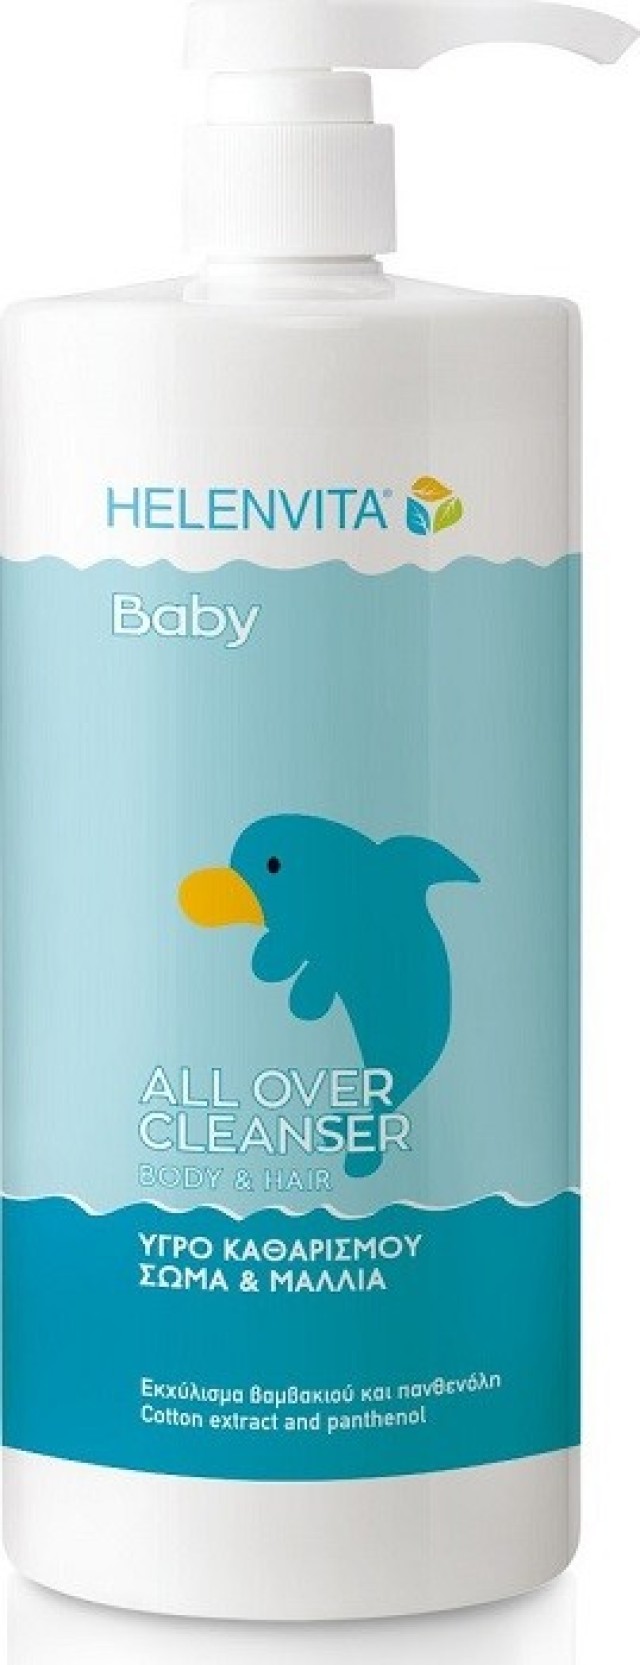 Helenvita Baby All Over Cleanser -40% Βρεφικό Καθαριστικό Υγρό για Σώμα & Μαλλιά 1Lt